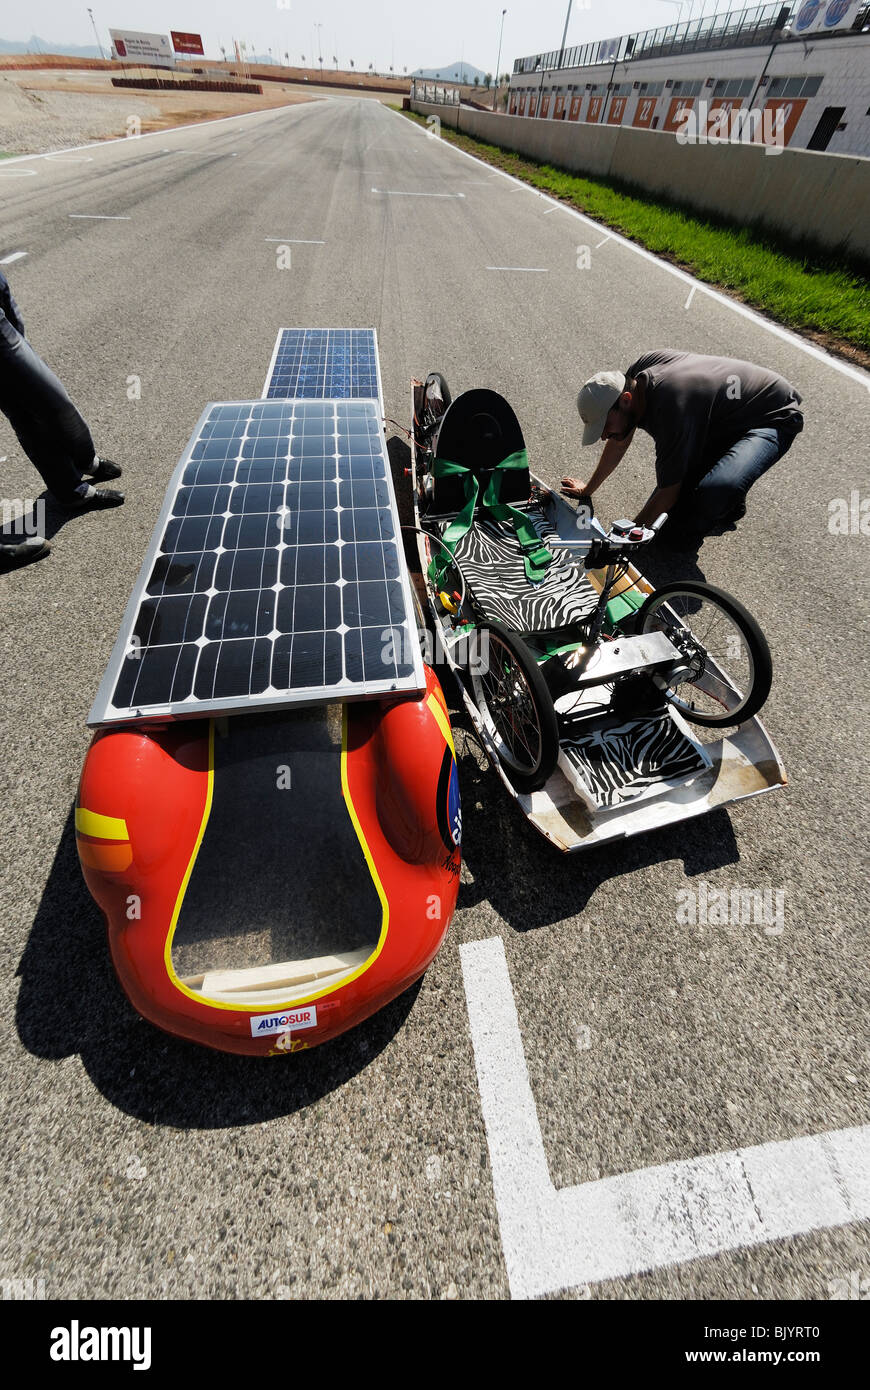 solar powered vehicle Stock Photo